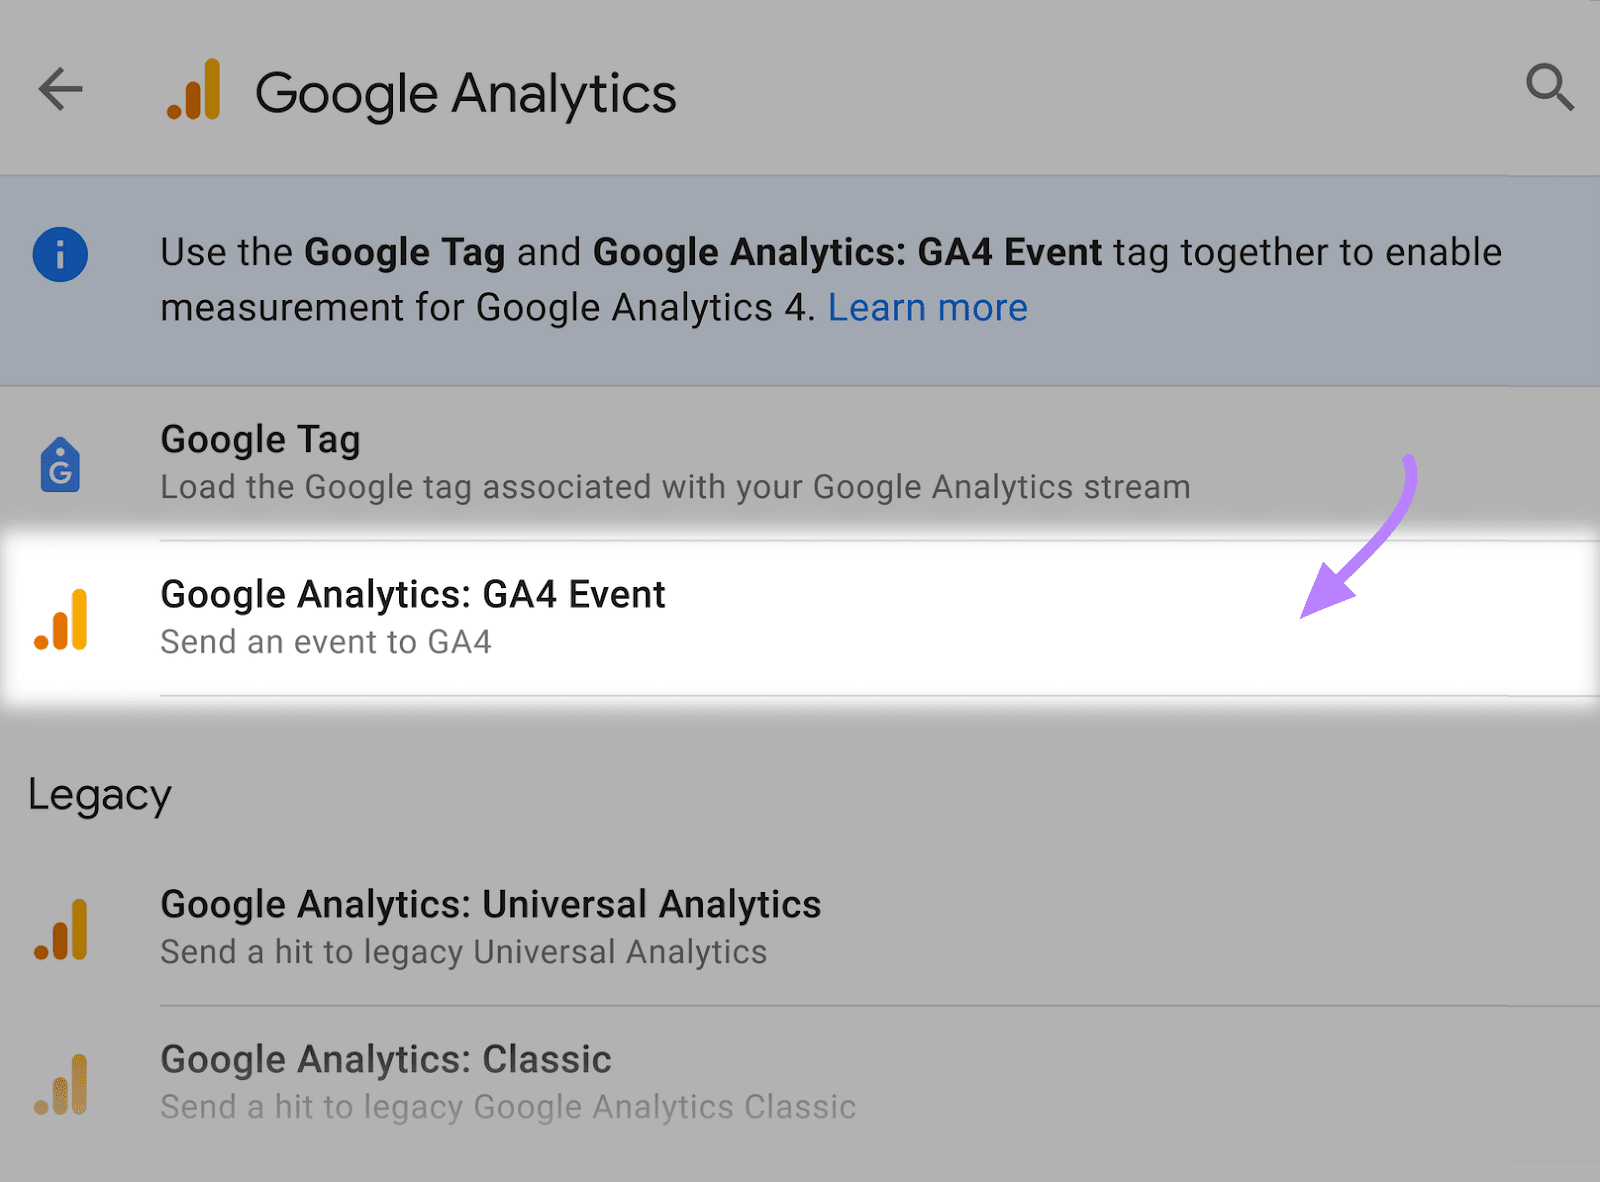 “Google Analytics: GA4 Event” selected from the list under "Google Analytics"